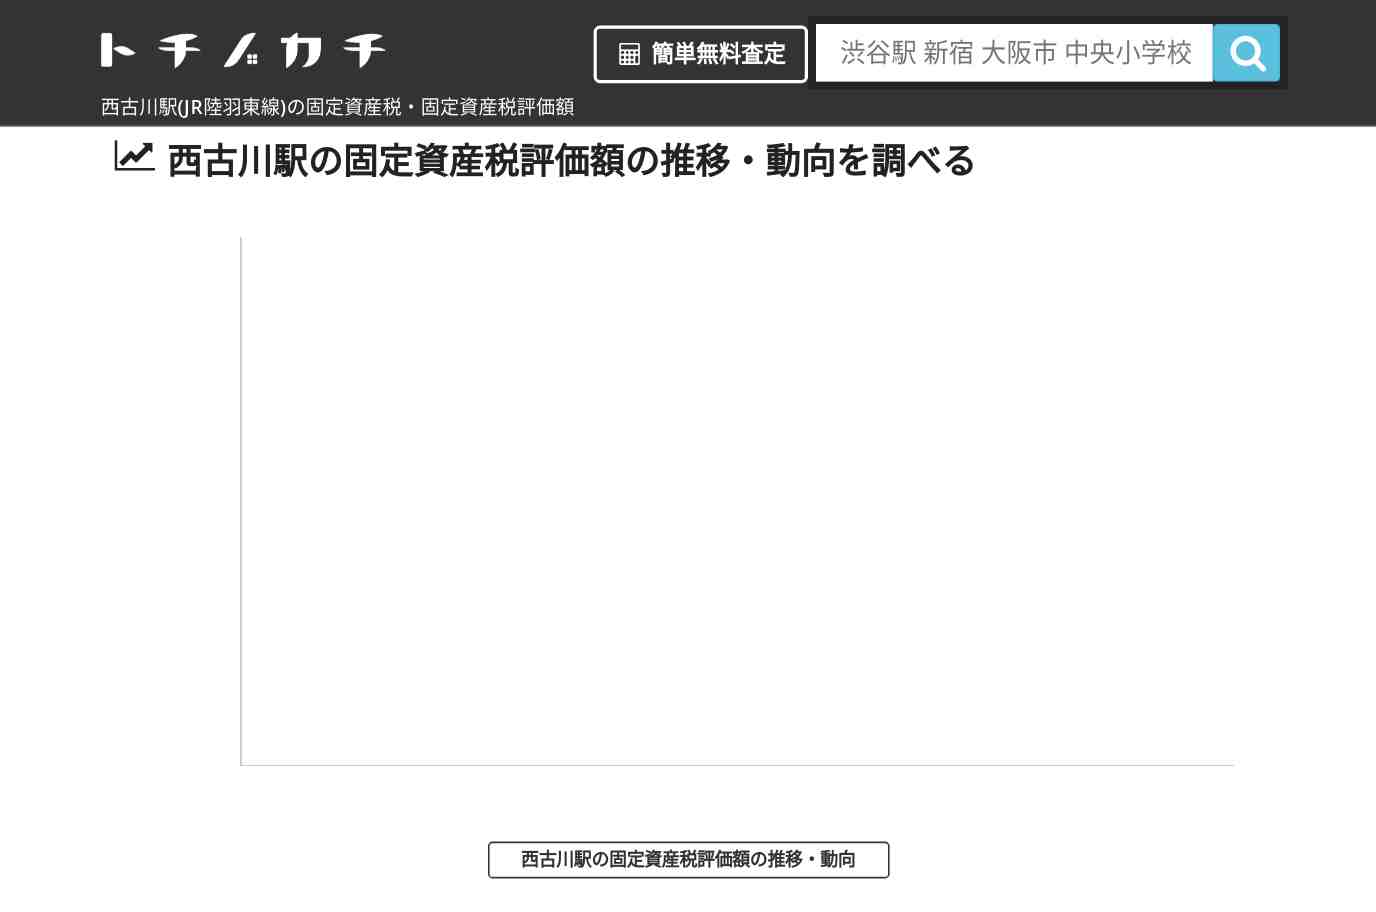 西古川駅(JR陸羽東線)の固定資産税・固定資産税評価額 | トチノカチ